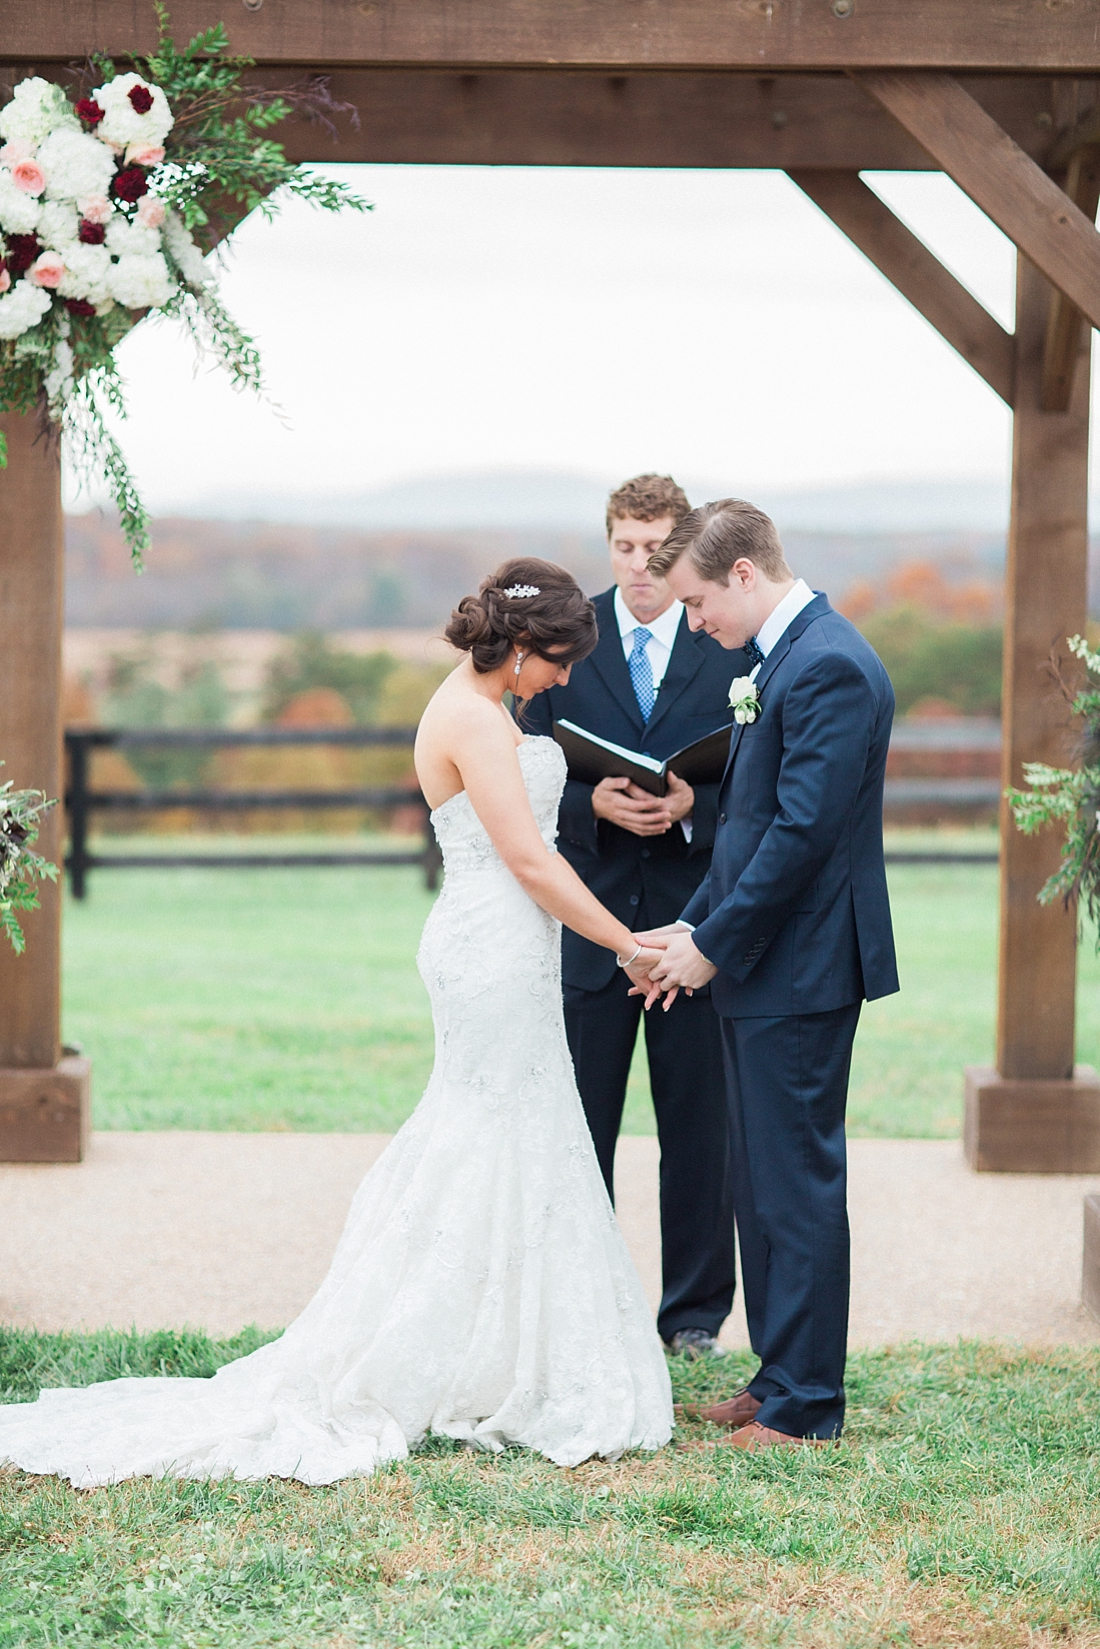 Earthy Charlottesville fall wedding | Abby Grace Photography